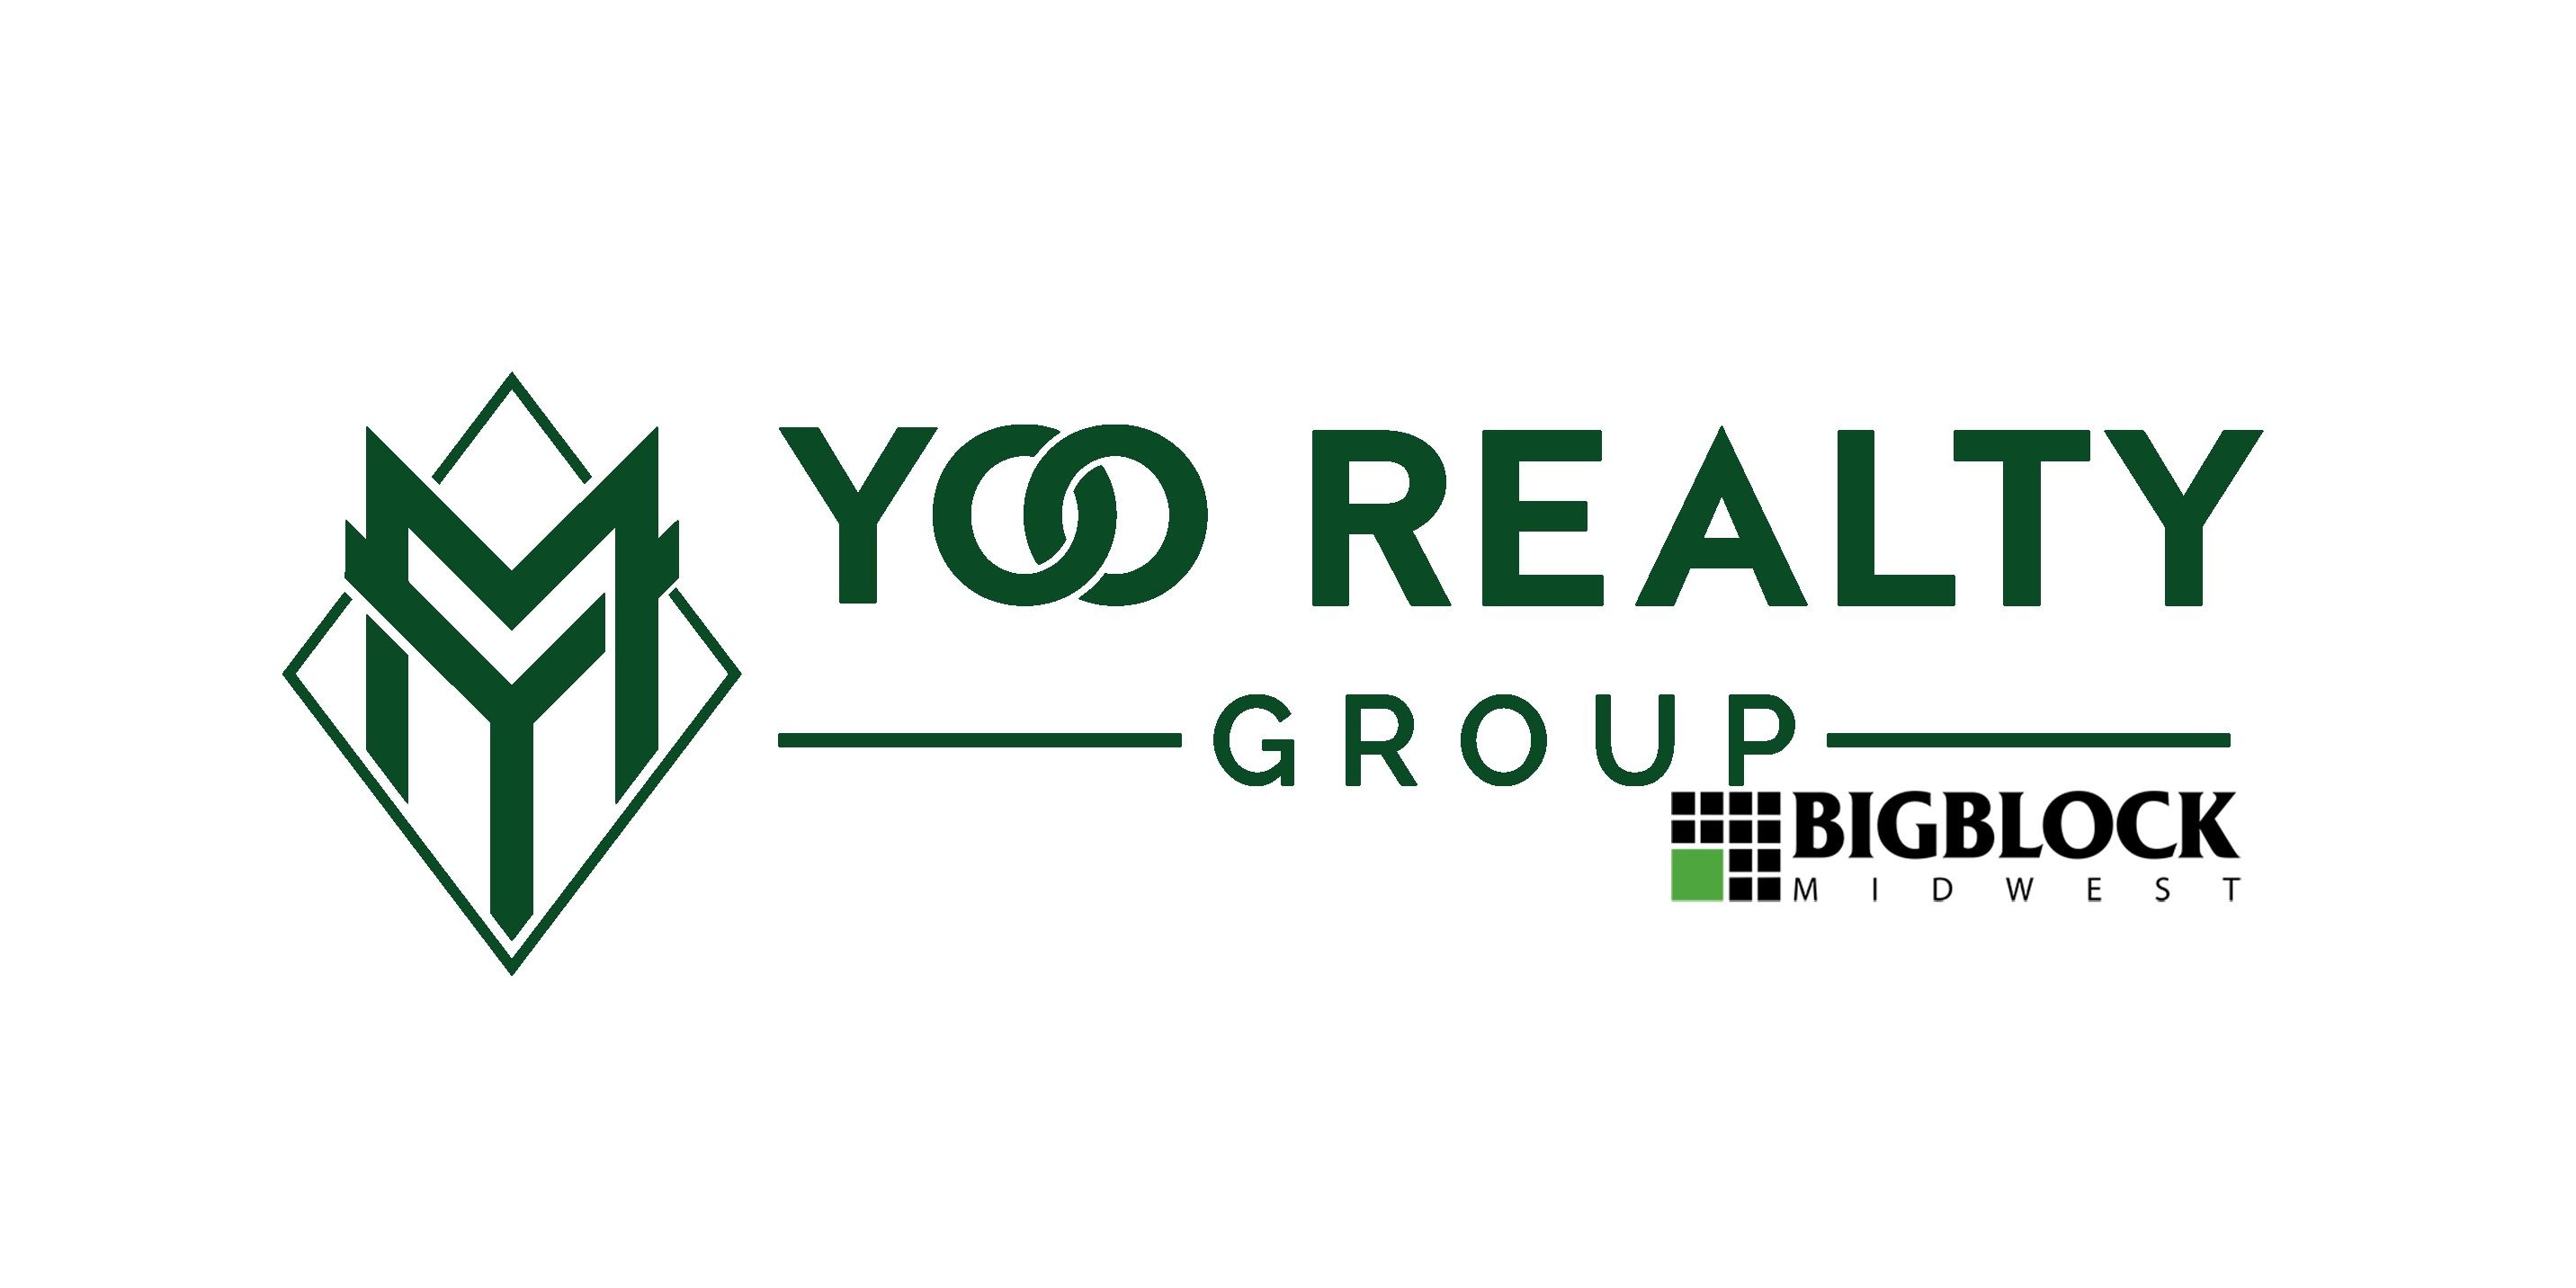 Yoo Realty Group